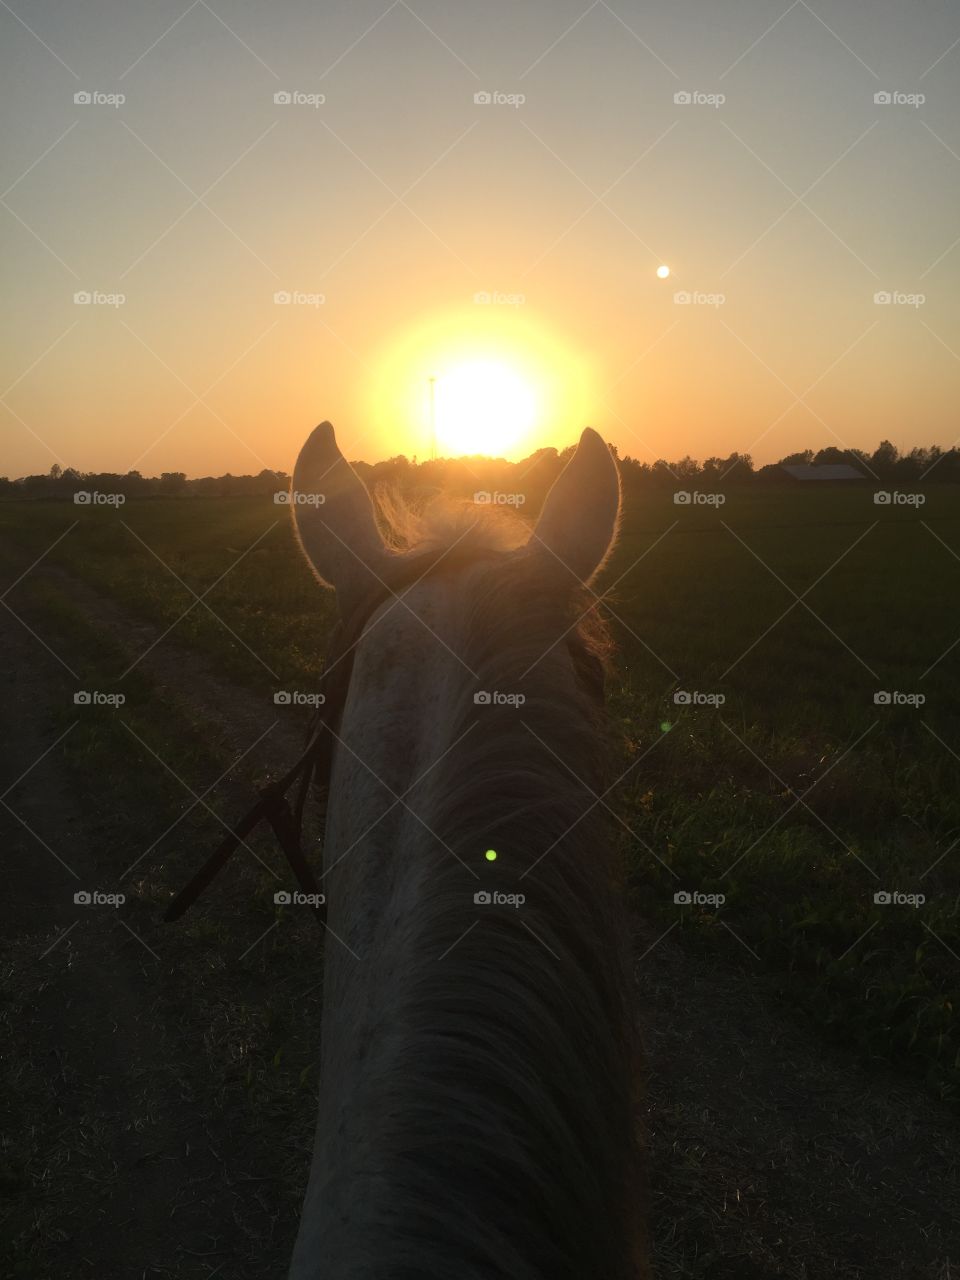 Horseback riding at sunset 